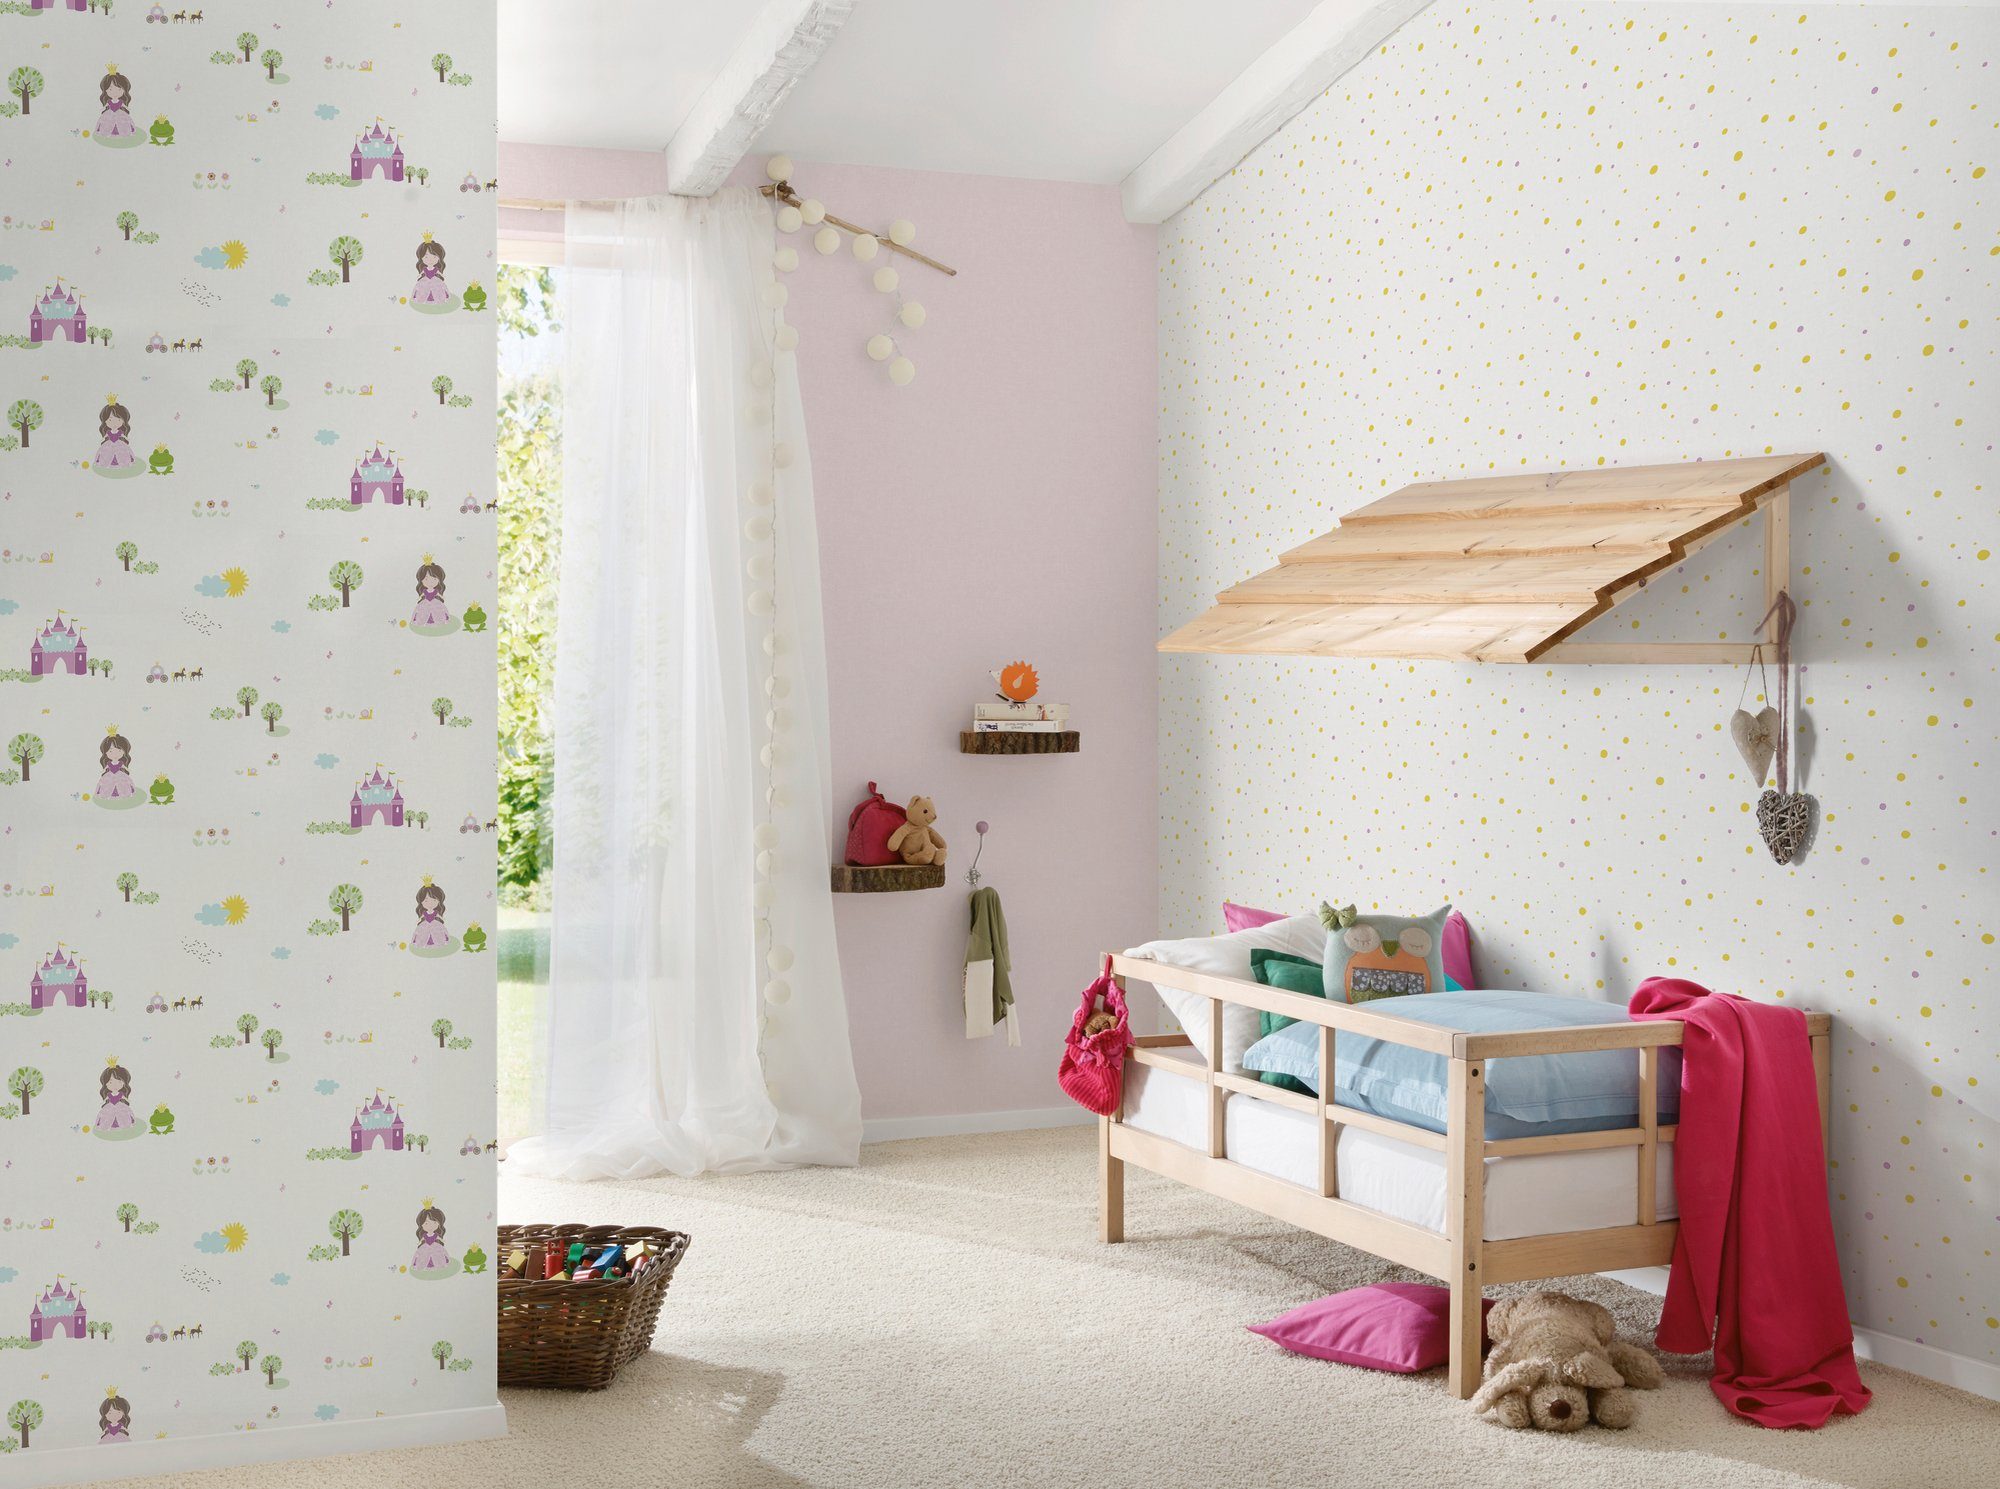 Little Kinderzimmer weiß/braun/rosa Tapete glatt, Metallic walls living Punkte Vliestapete gepunktet, Stars,